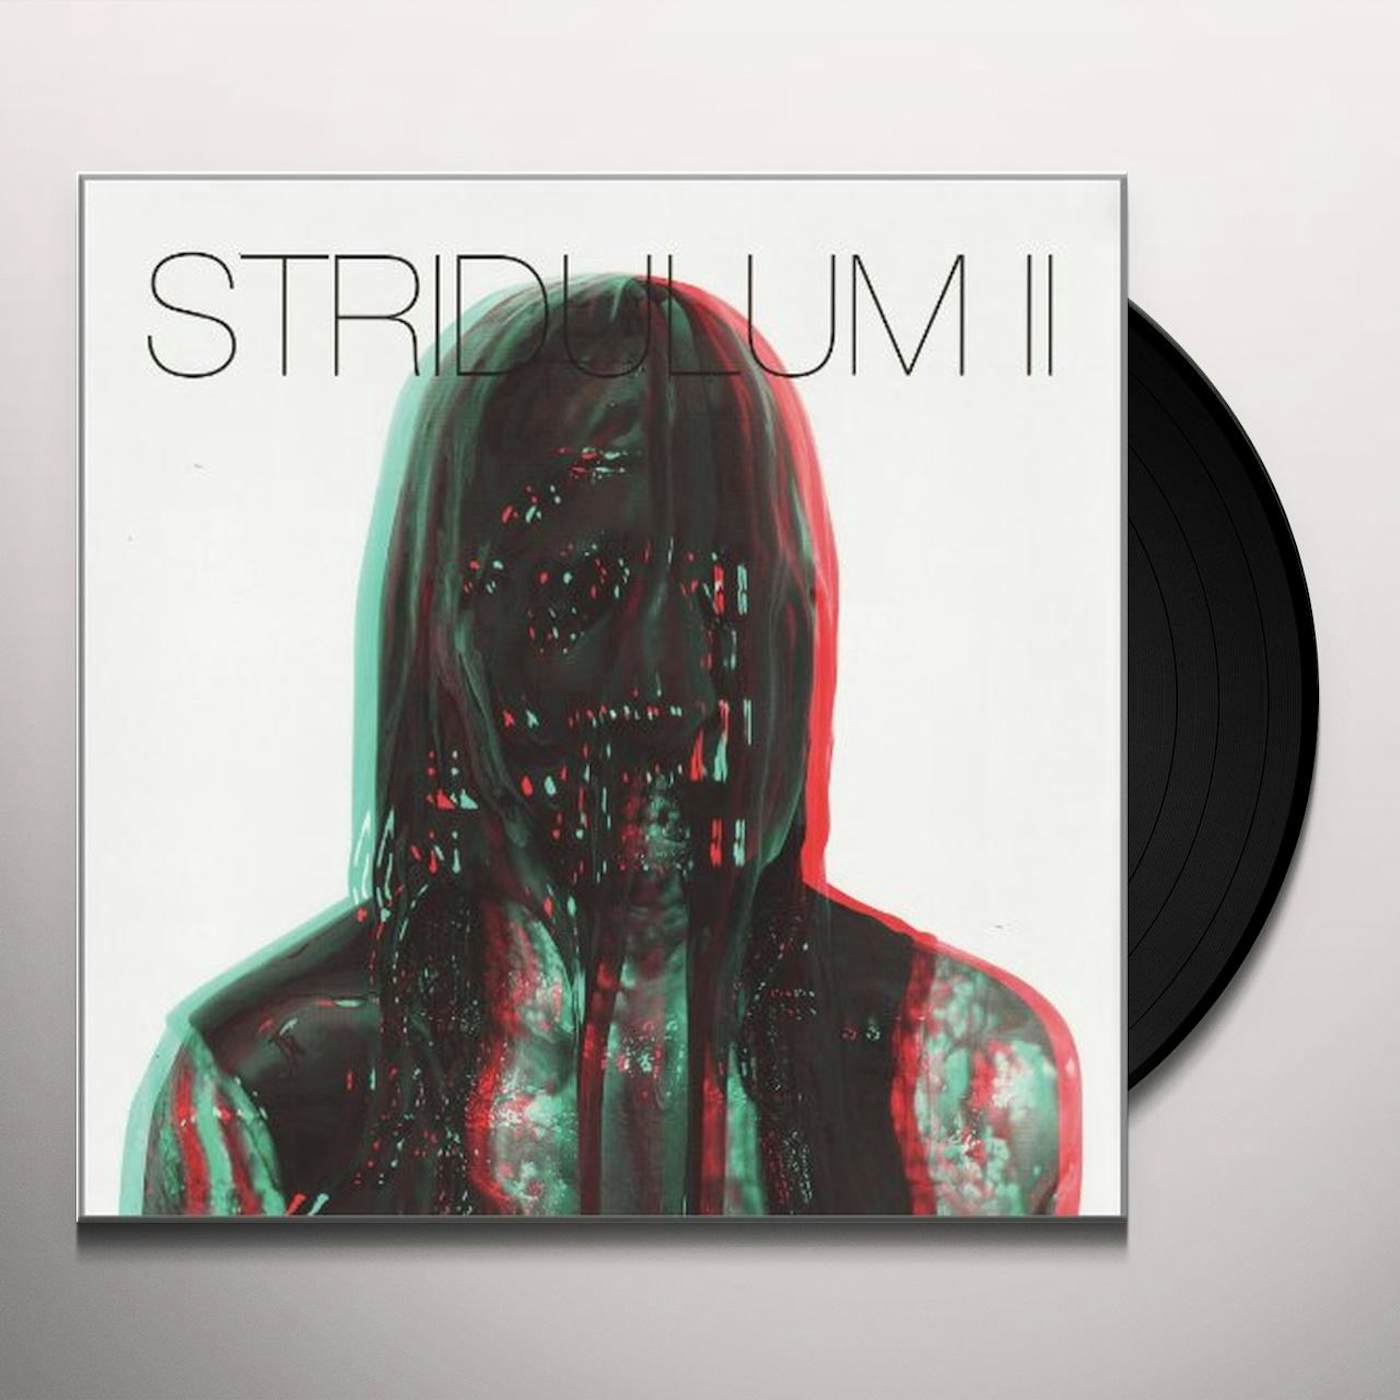 Zola Jesus STRIDULUM II Vinyl Record - UK Release